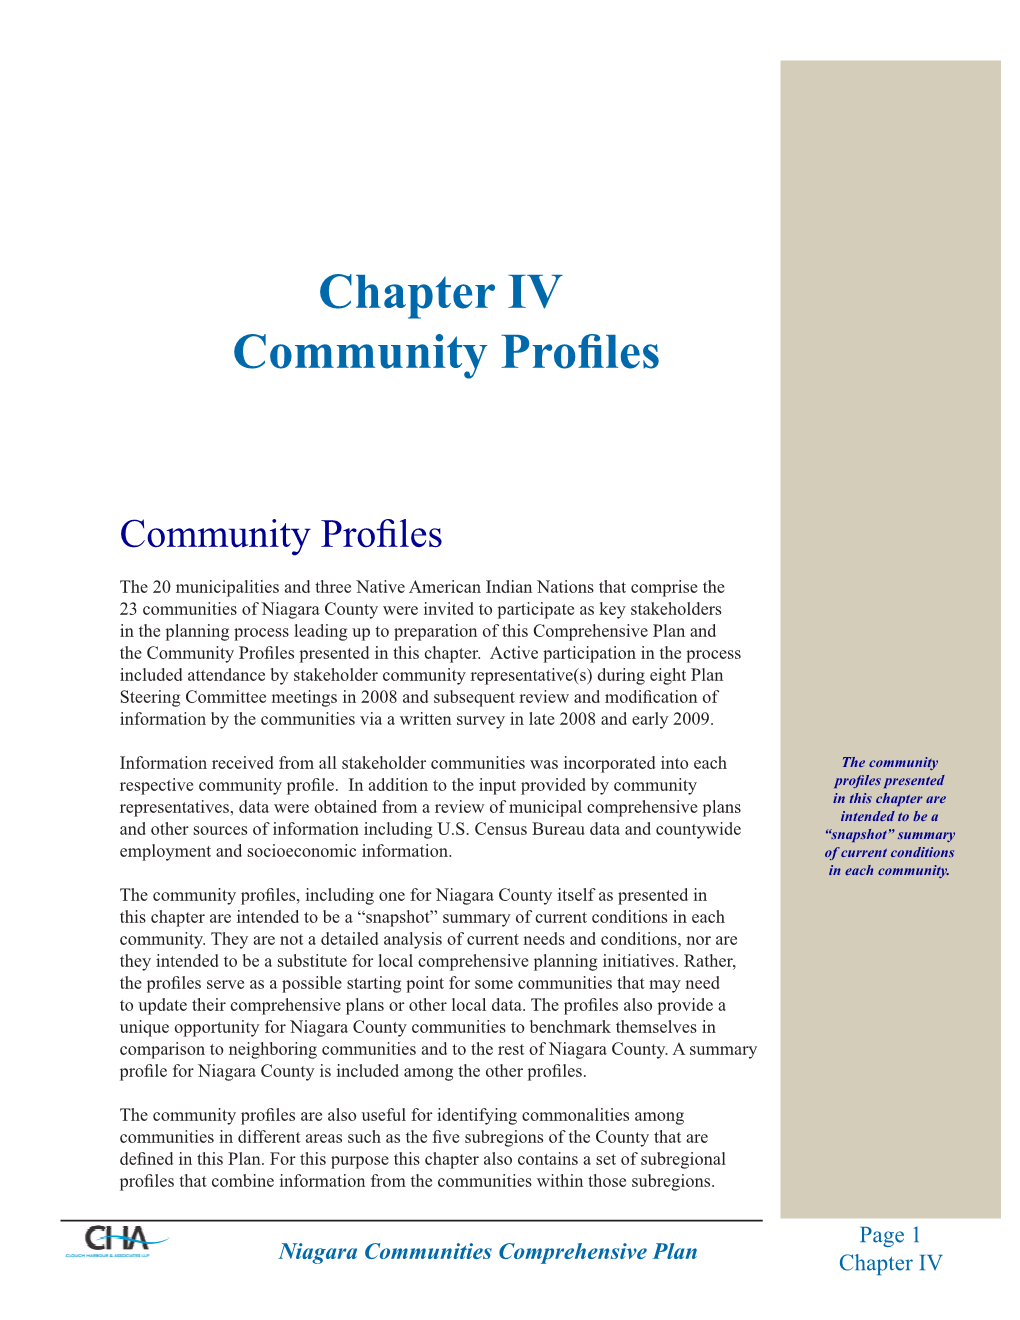 Chapter IV Community Profiles